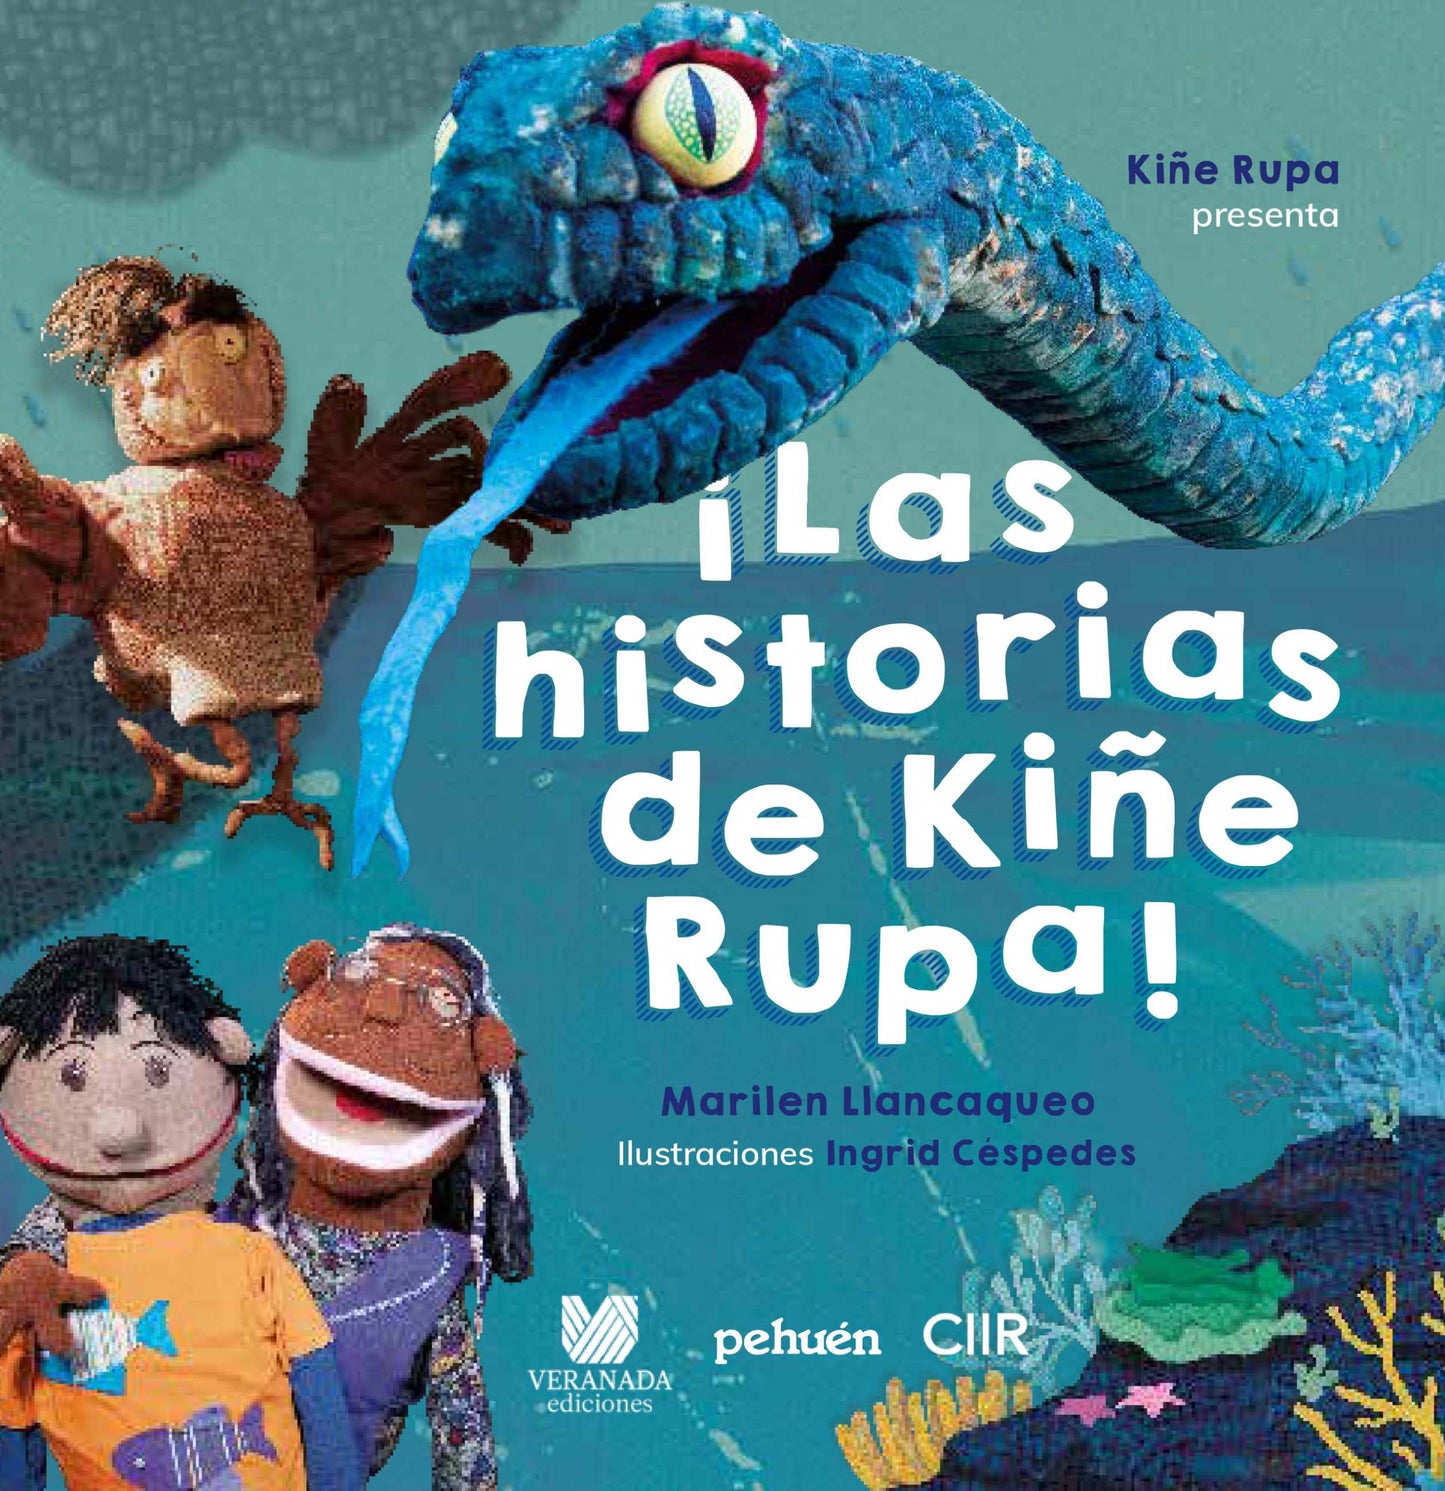 ¡Las historia de Kiñe Rupa!